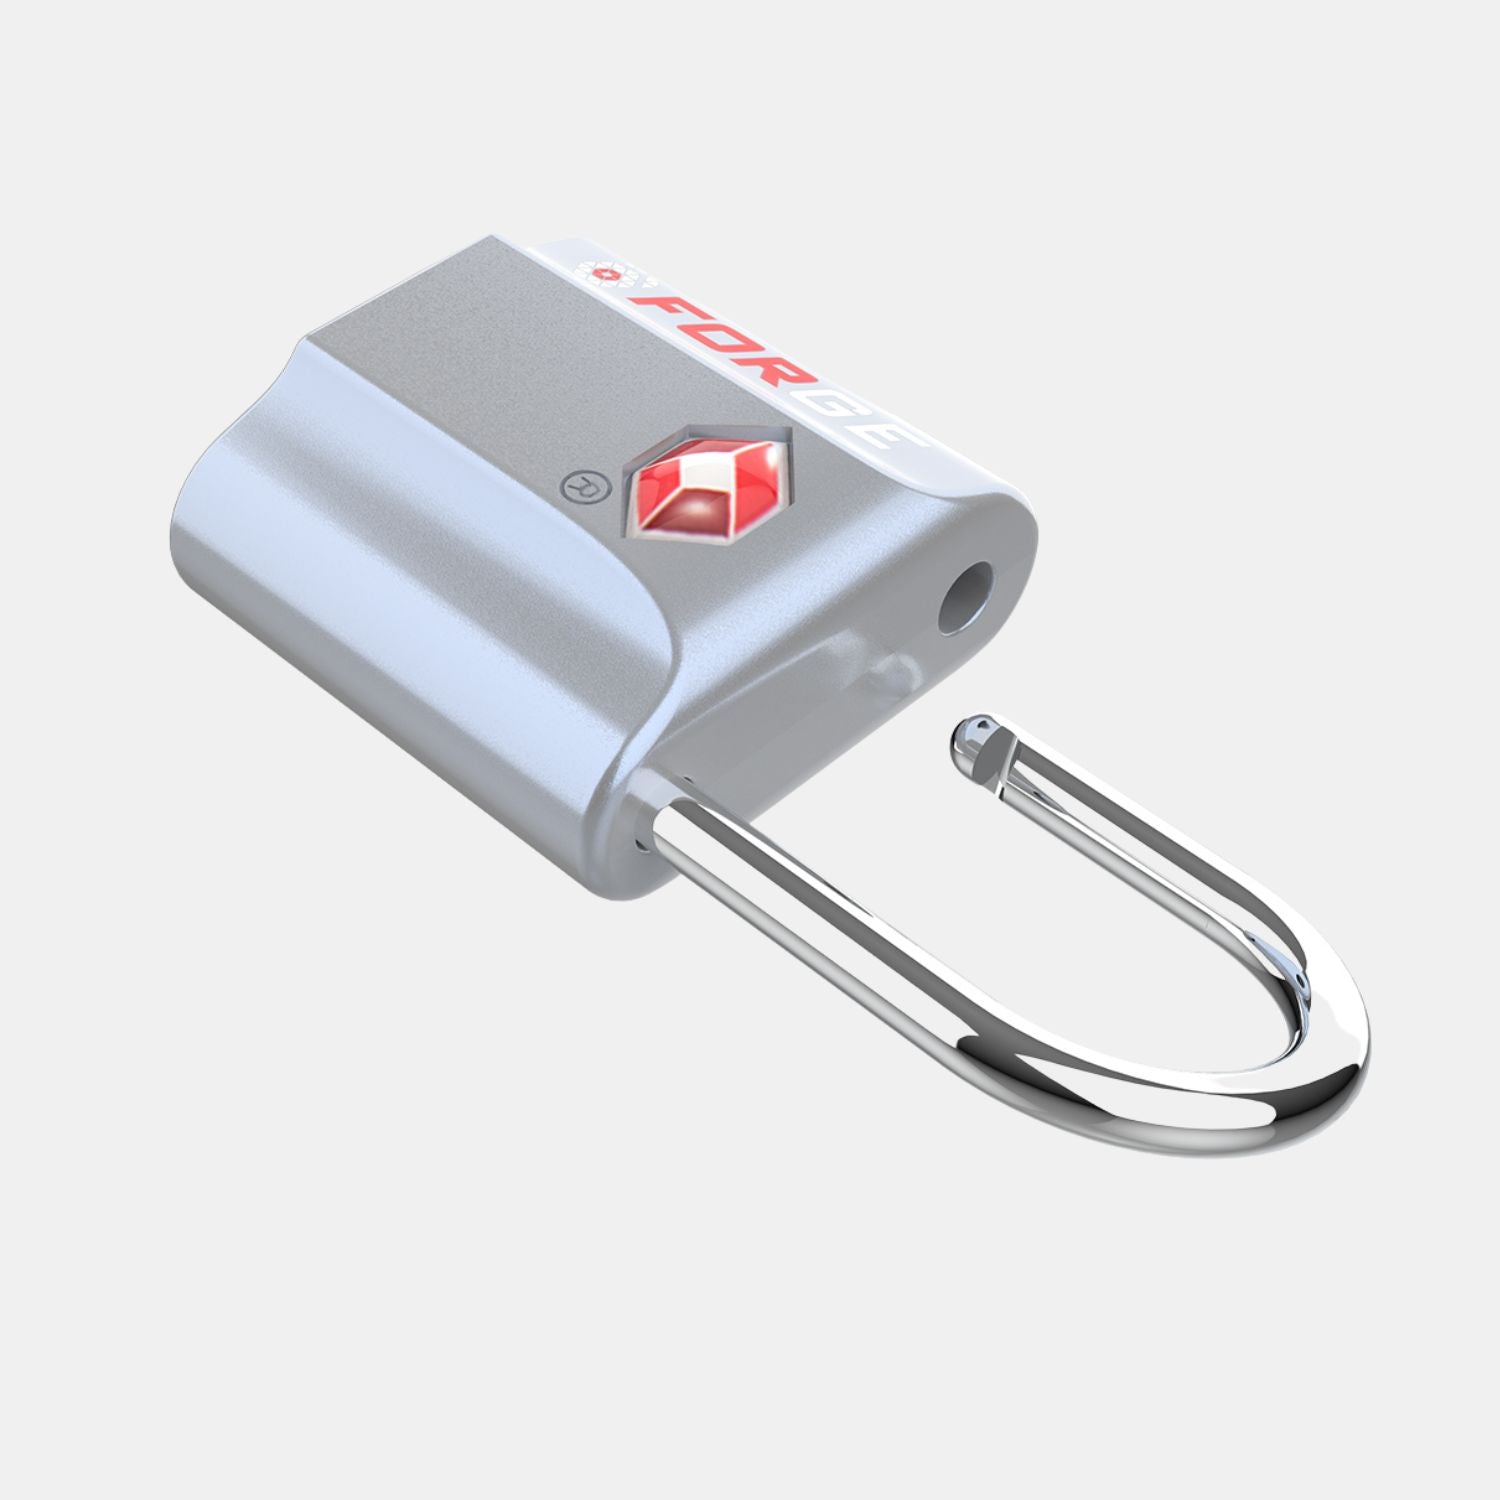 TSA Approved Dimple Key Luggage Lock - TSA006 Key, Ultra-Secure Small Size Lock. Silver 2 Locks